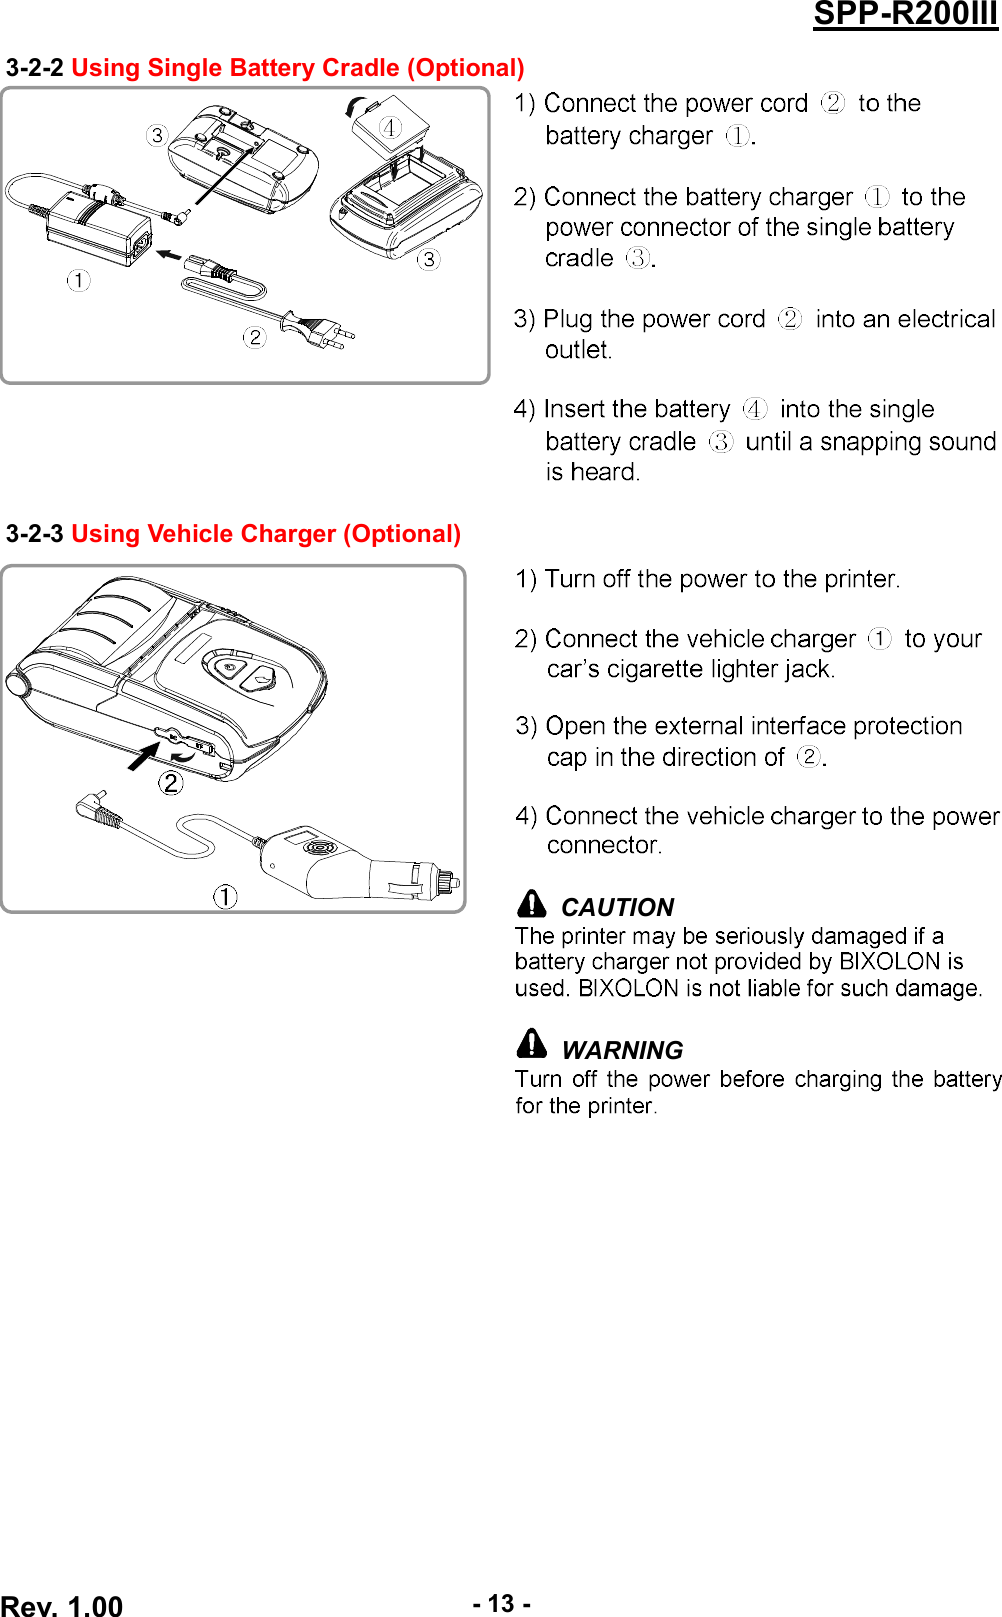 Rev. 1.00-13-SPP-R200III3-2-2 Using Single Battery Cradle (Optional)3-2-3 Using Vehicle Charger (Optional)CAUTIONWARNING